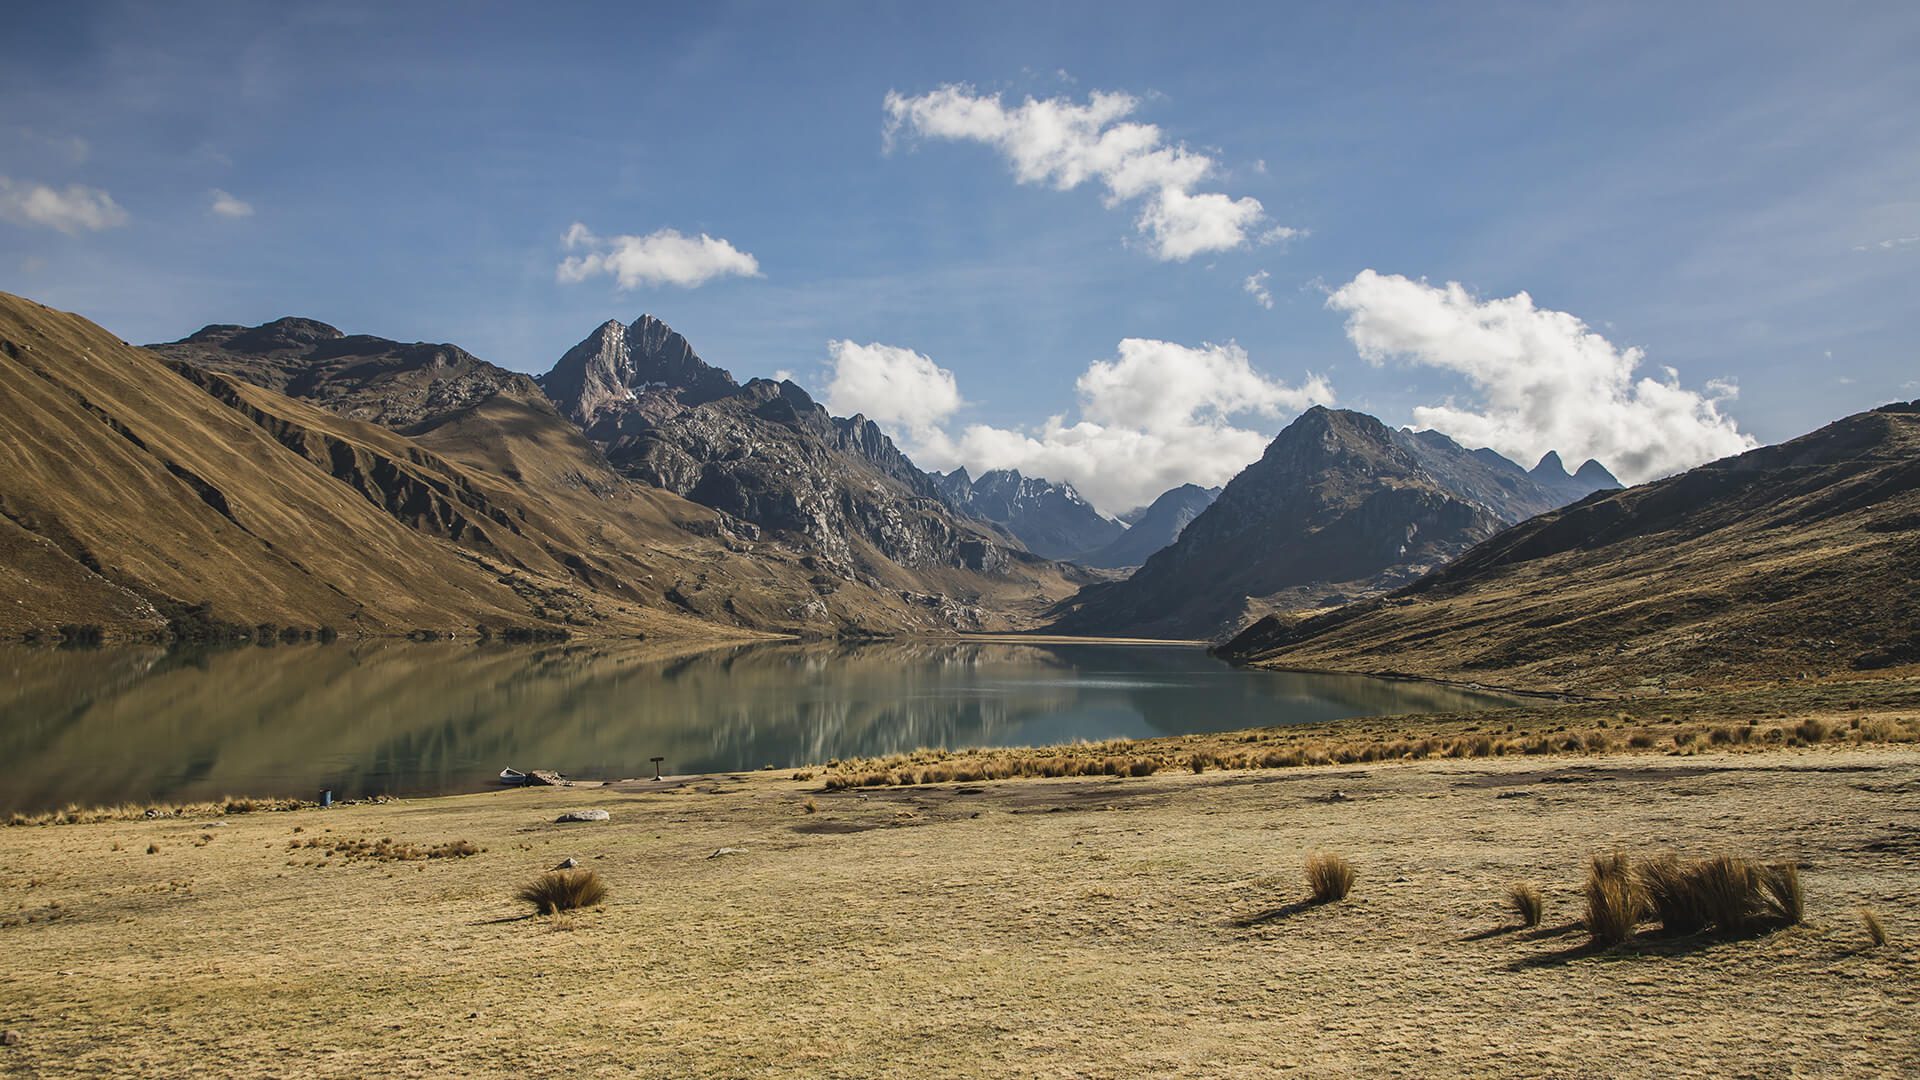 Conococha lake on the way to Chavín de Huantar - Ancash | RESPONSible Travel Peru